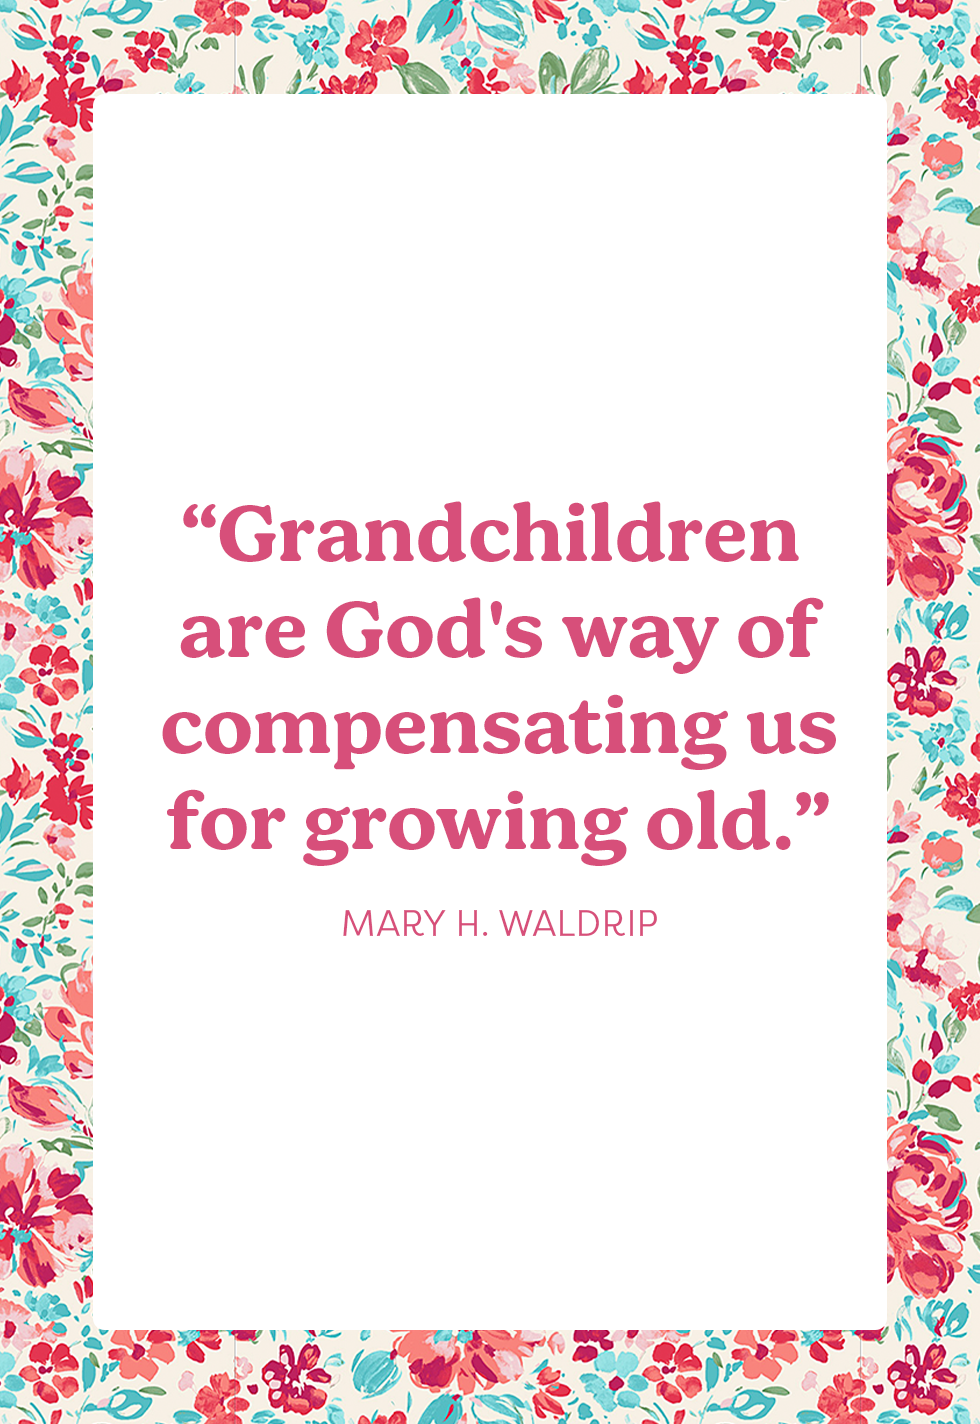 21 Best Grandparent Quotes for Grandparents' Day